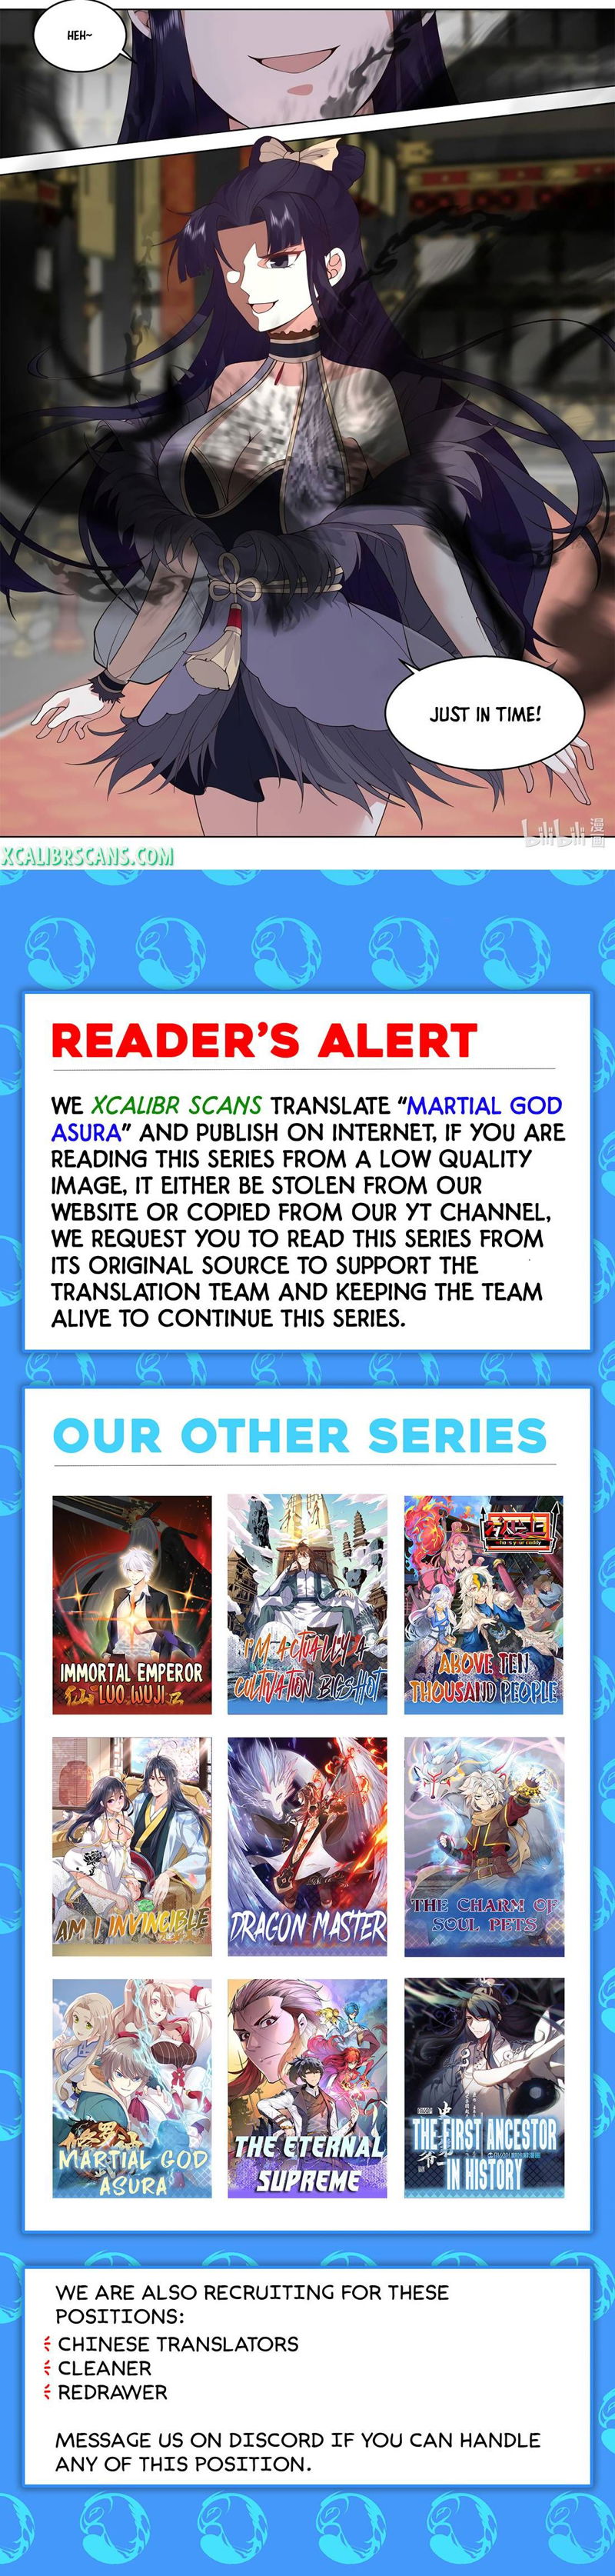 Martial God Asura Chapter 504 page 10